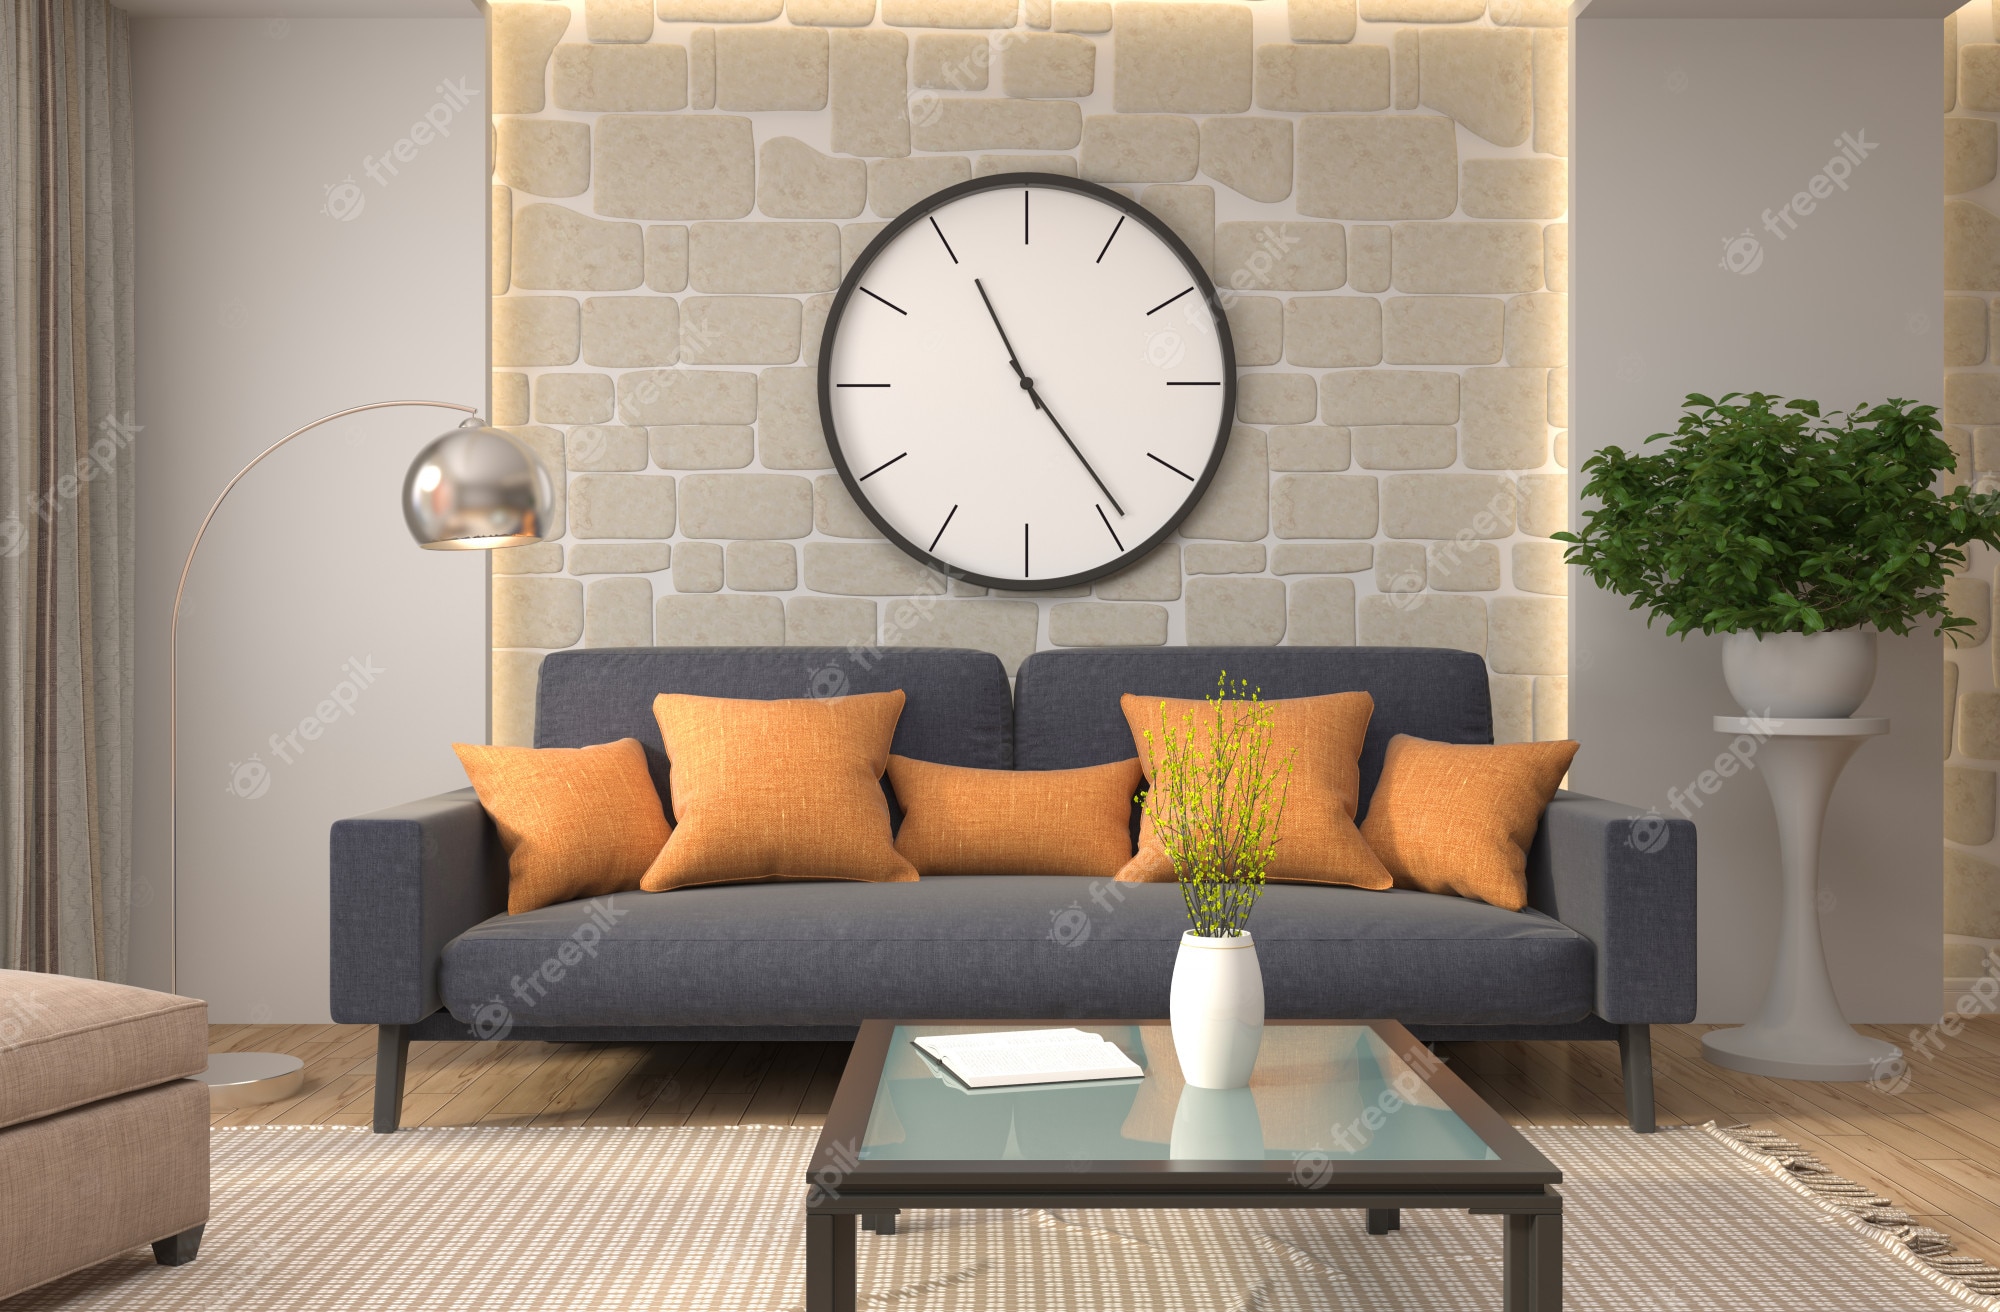 living room wall clock decor ideas